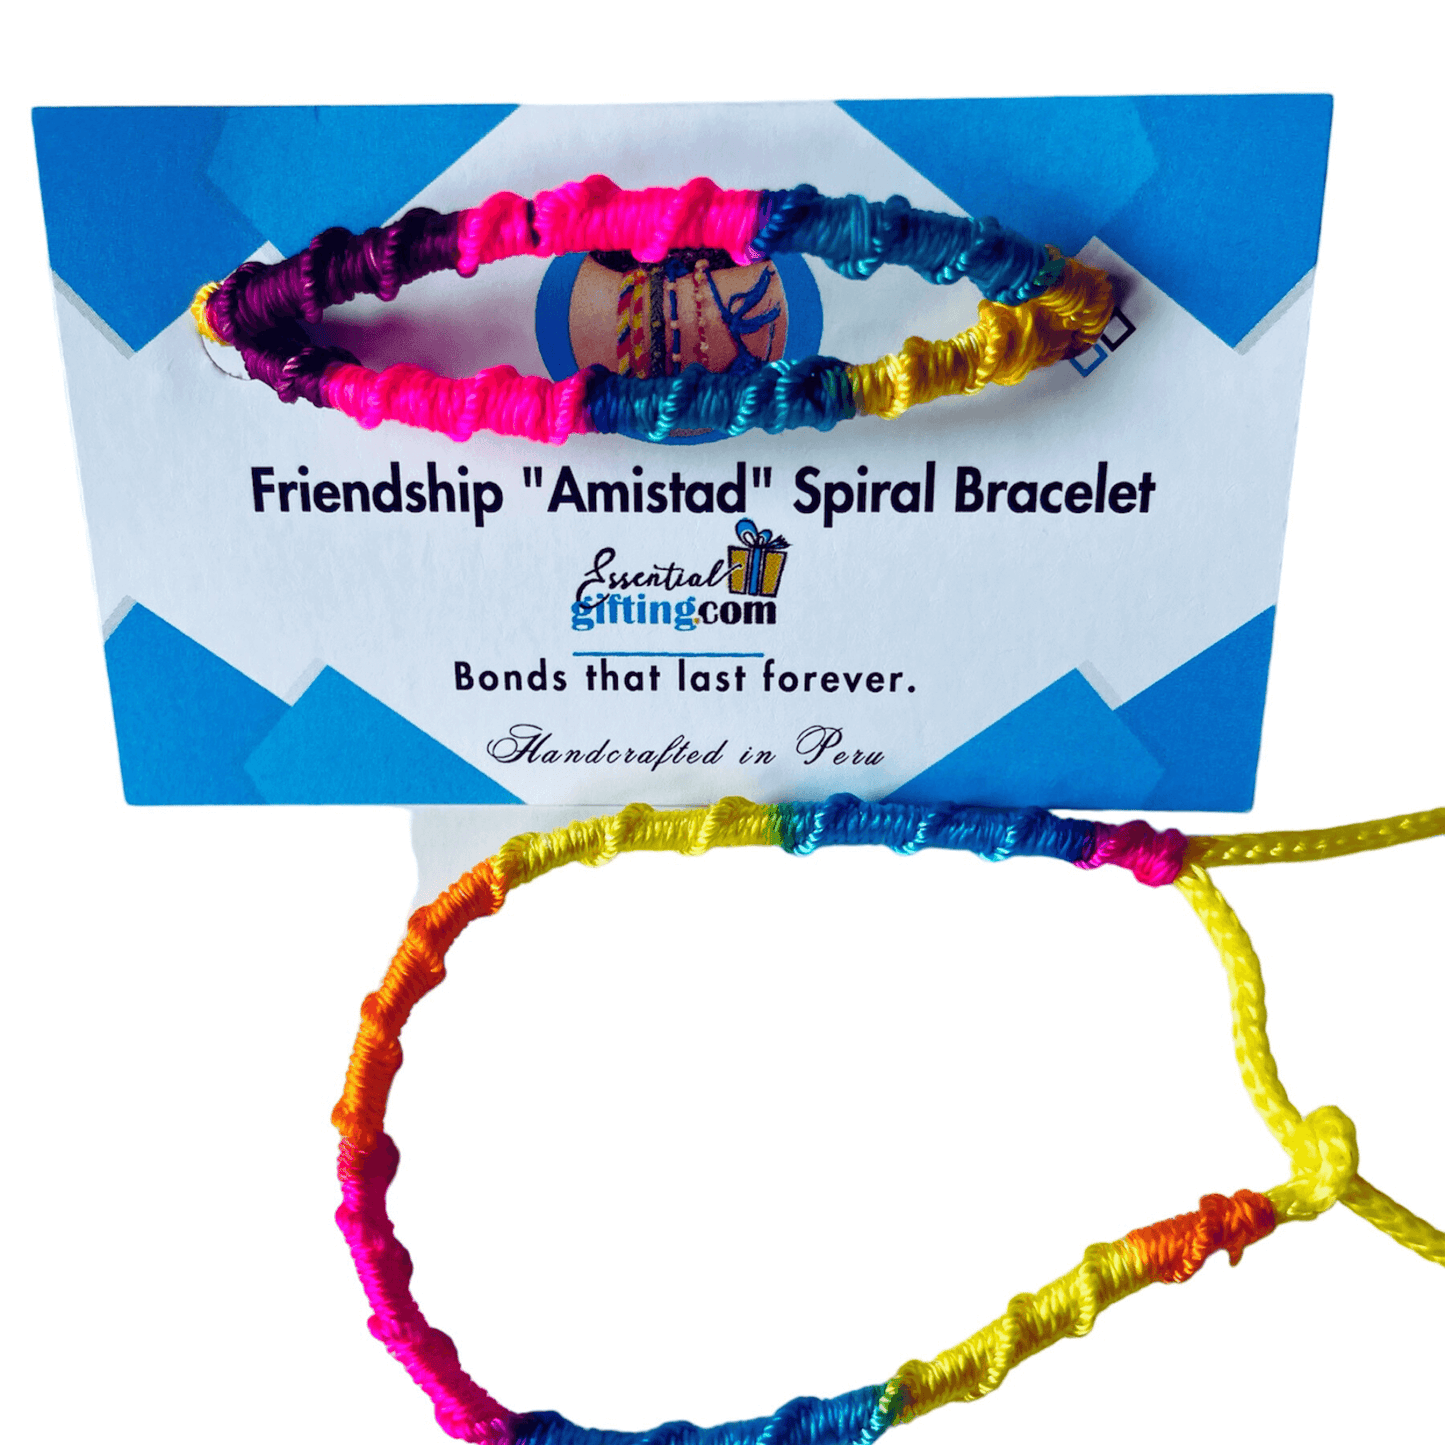 Colorful friendship bracelets for girls, an assortment of vibrant spiral woven bracelets on display.